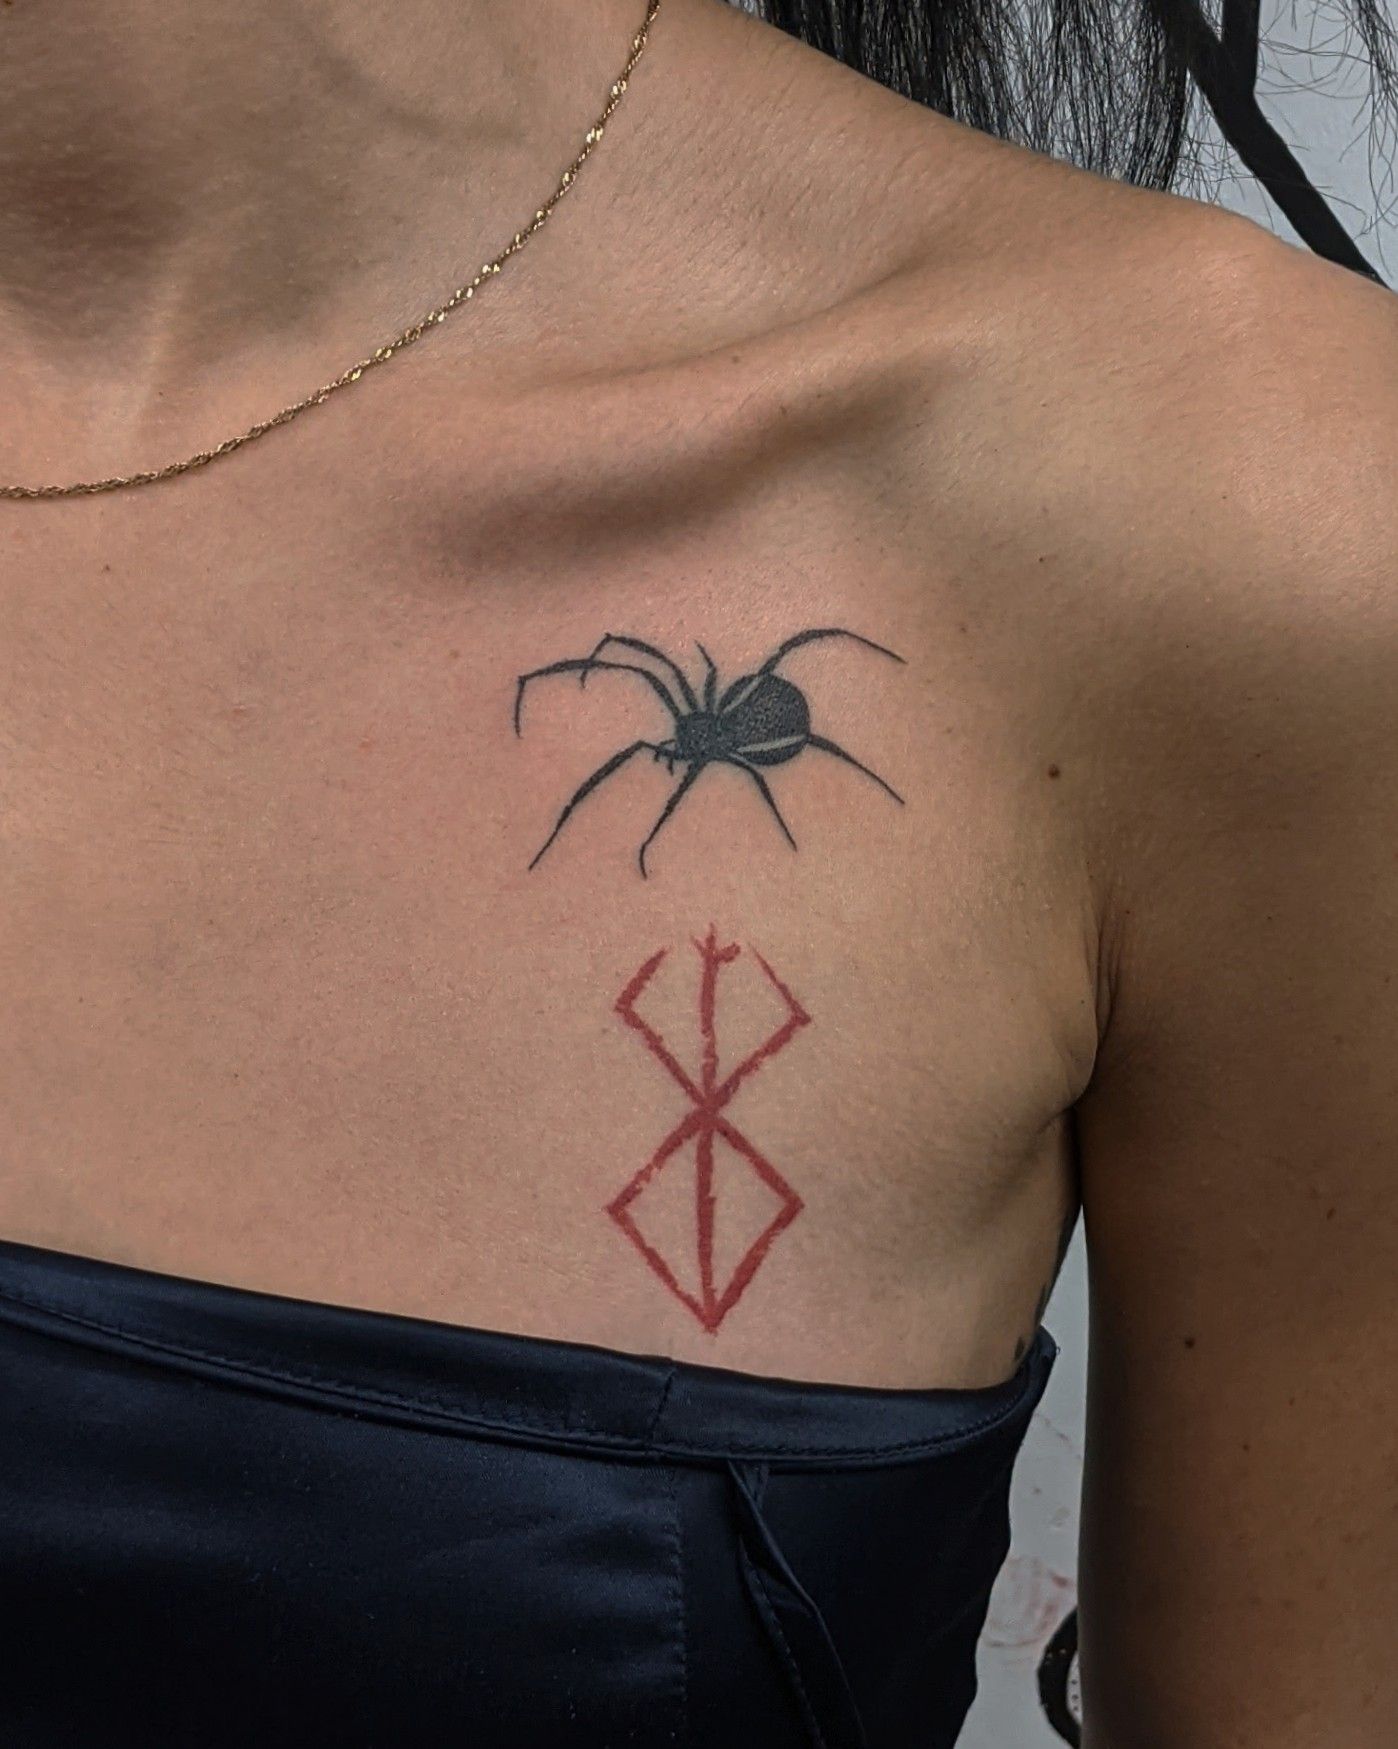 Hanging Spider Temporary Tattoo (Set of 3) – Small Tattoos